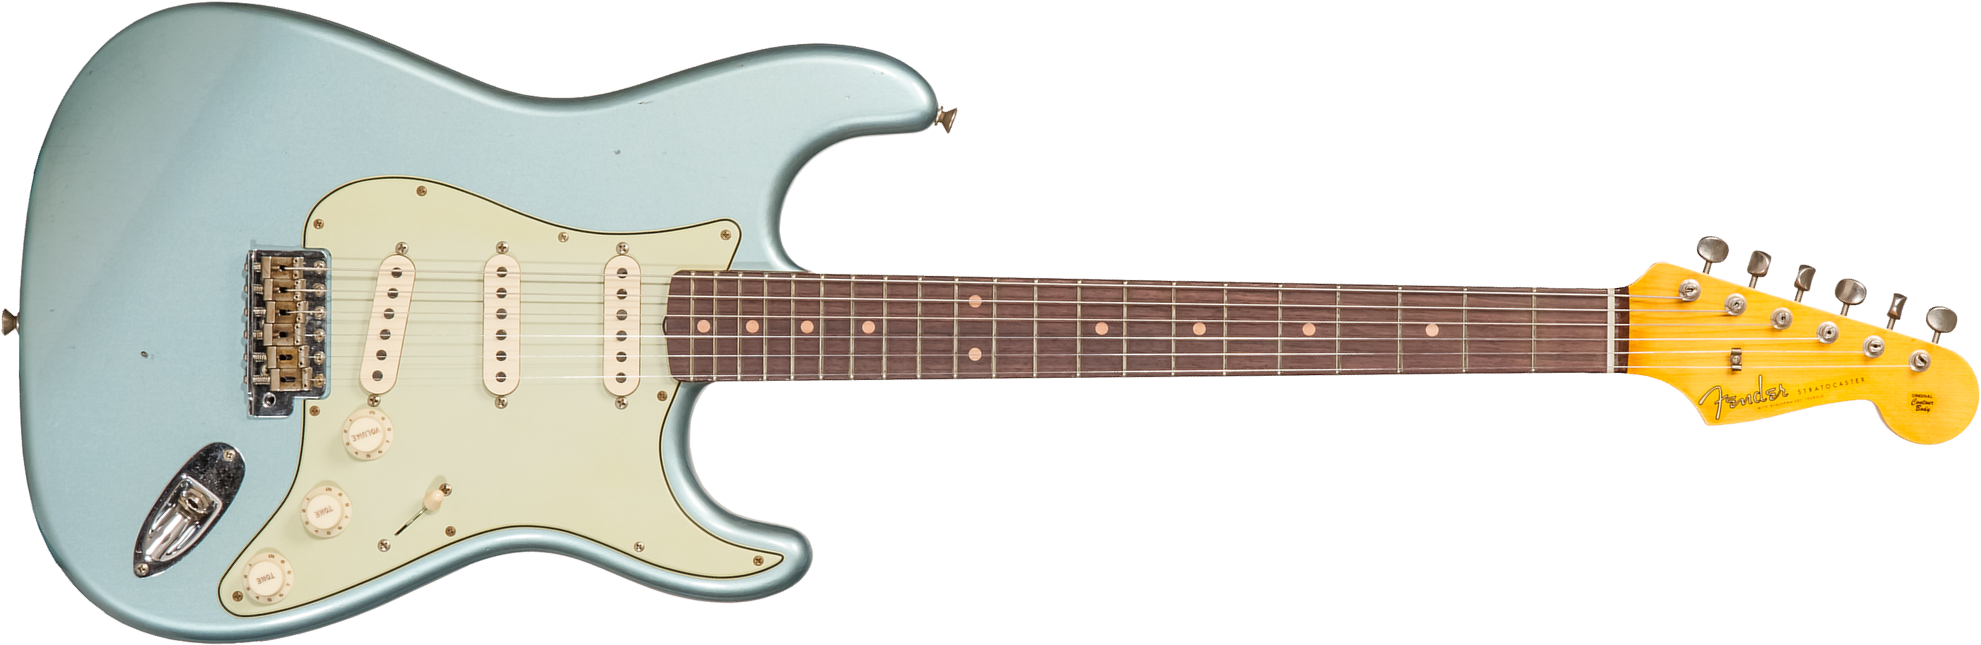 Fender Custom Shop Strat 1959 3s Trem Rw #cz570883 - Journeyman Relic Teal Green Metallic - Elektrische gitaar in Str-vorm - Main picture